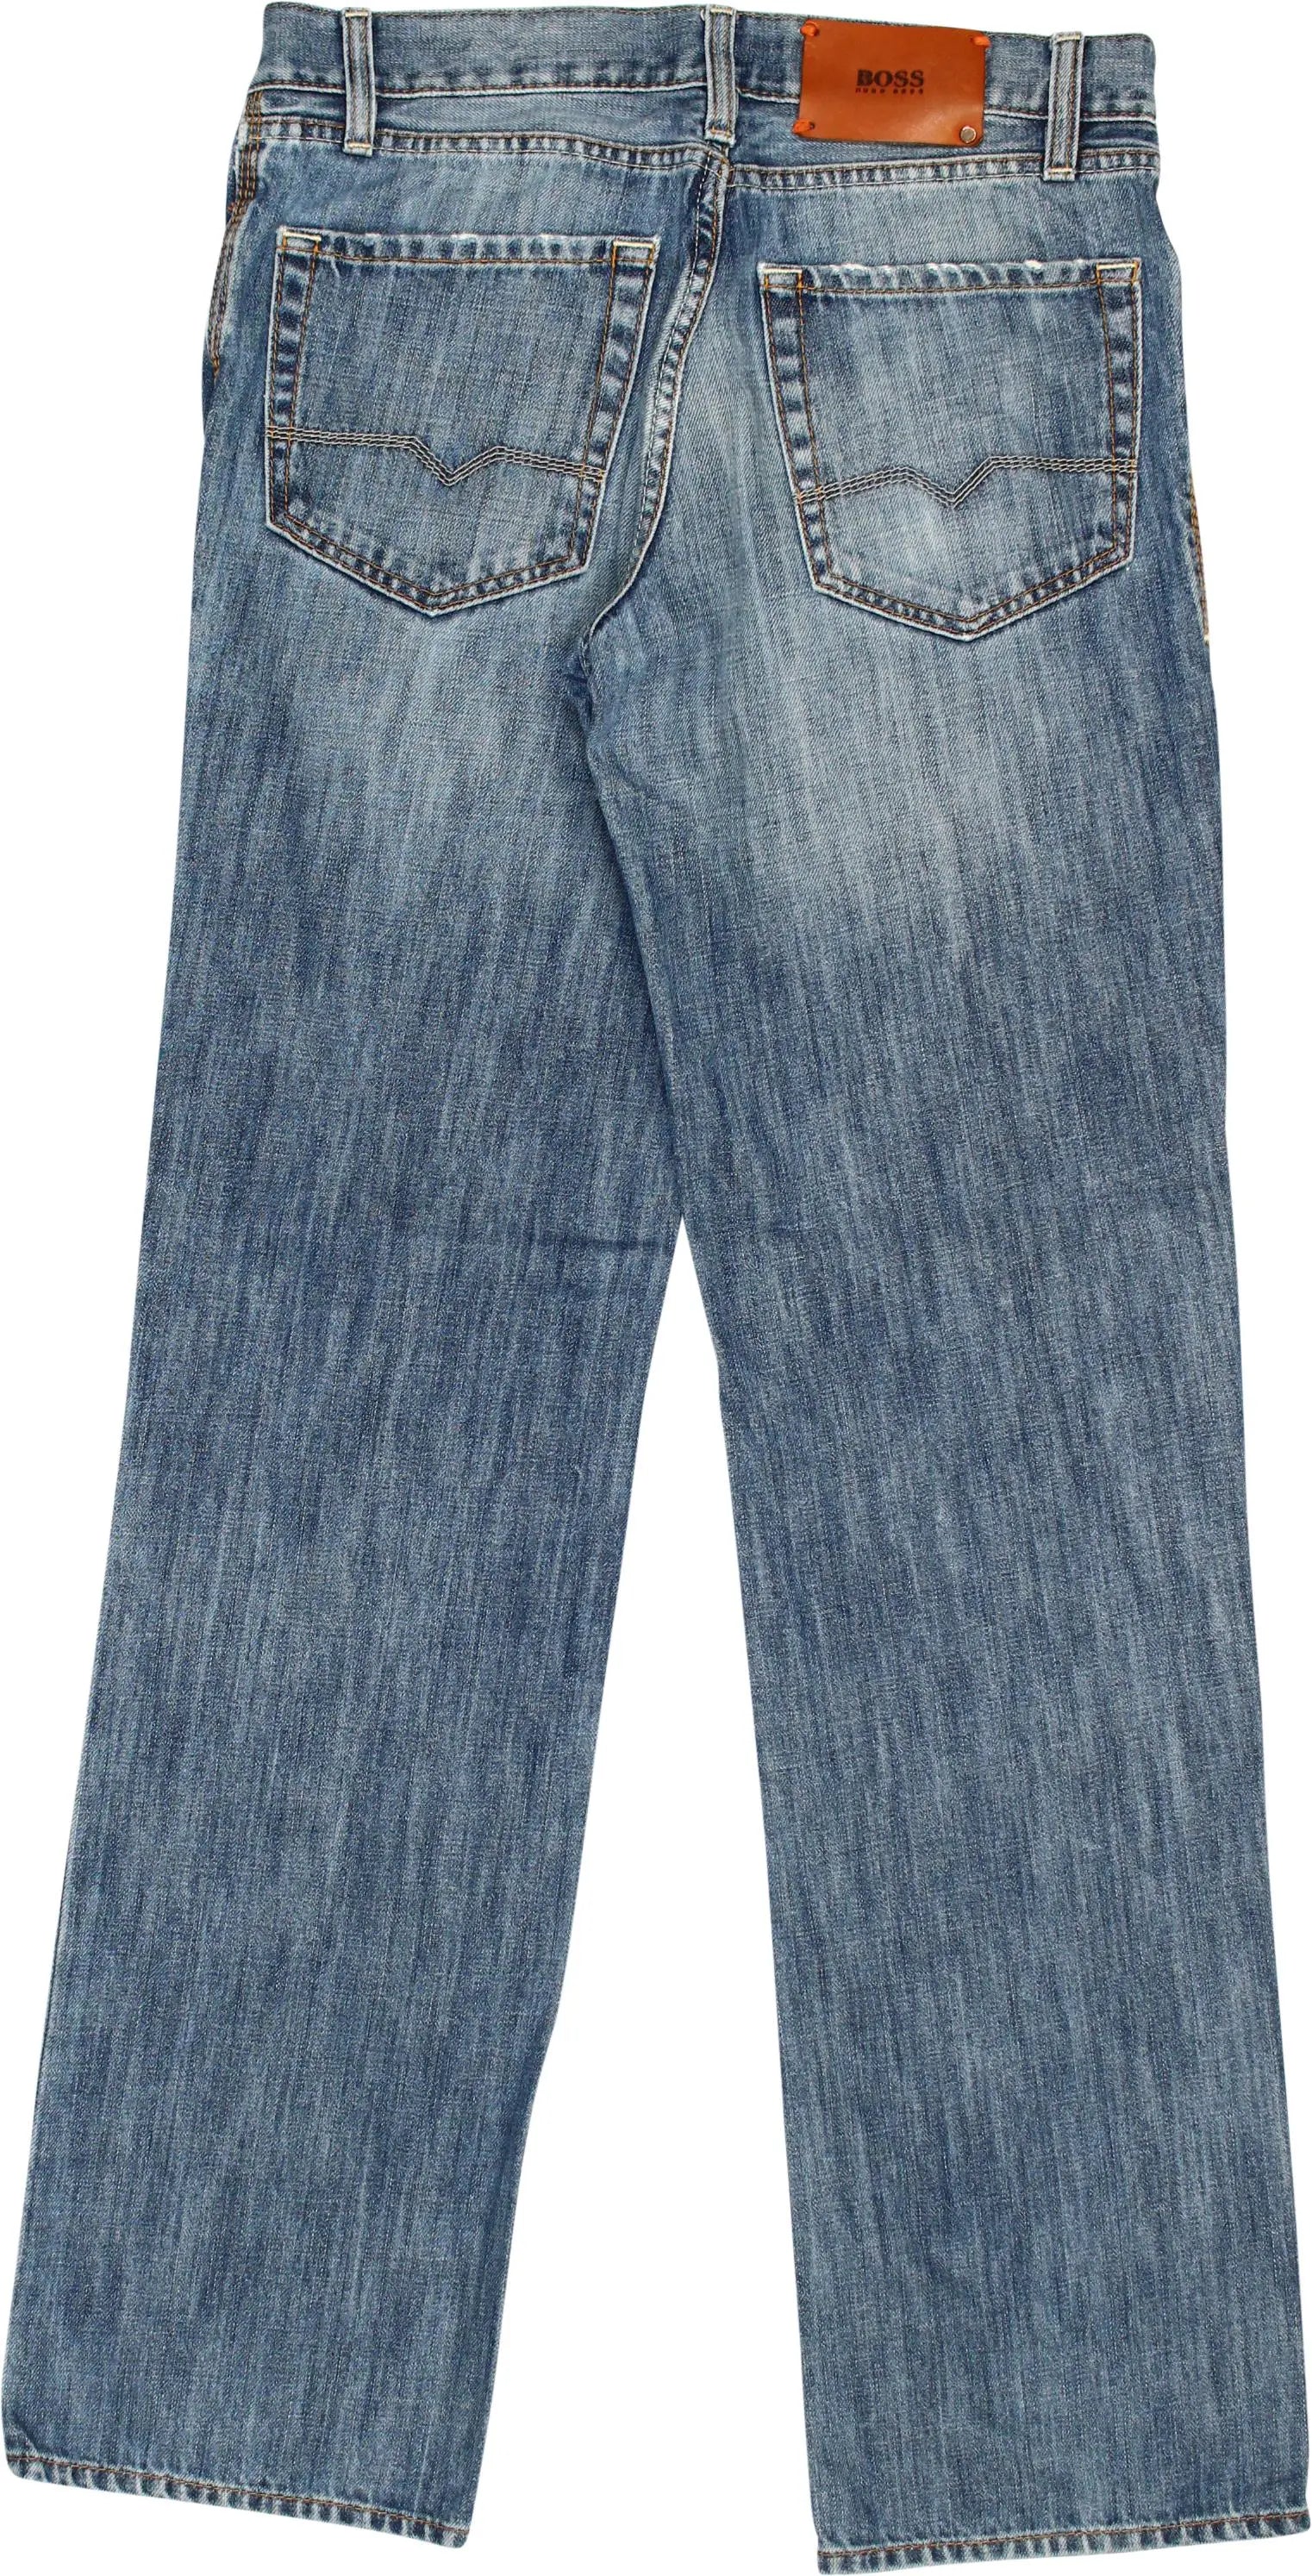 Hugo Boss - Regular Fit Jeans- ThriftTale.com - Vintage and second handclothing